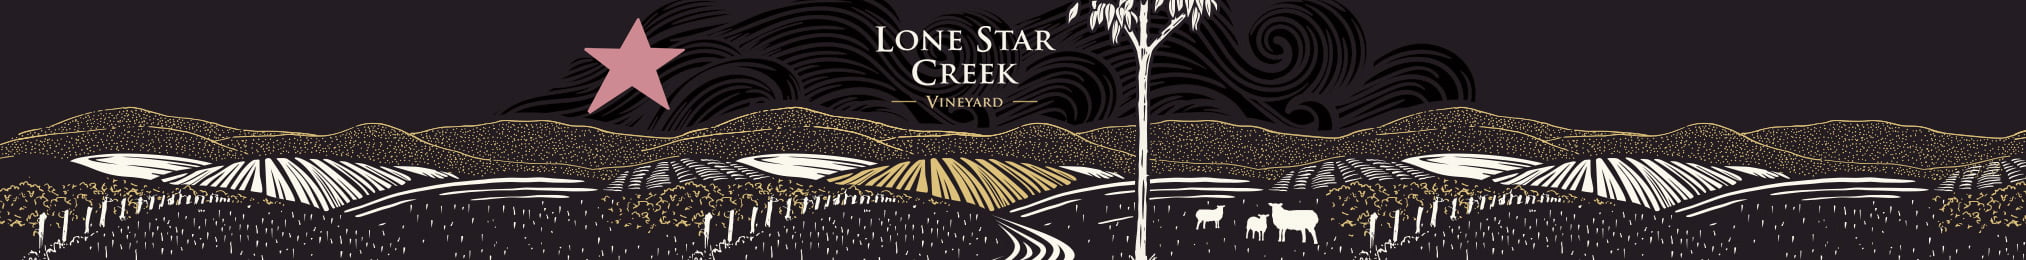 Lone Star Creek logo